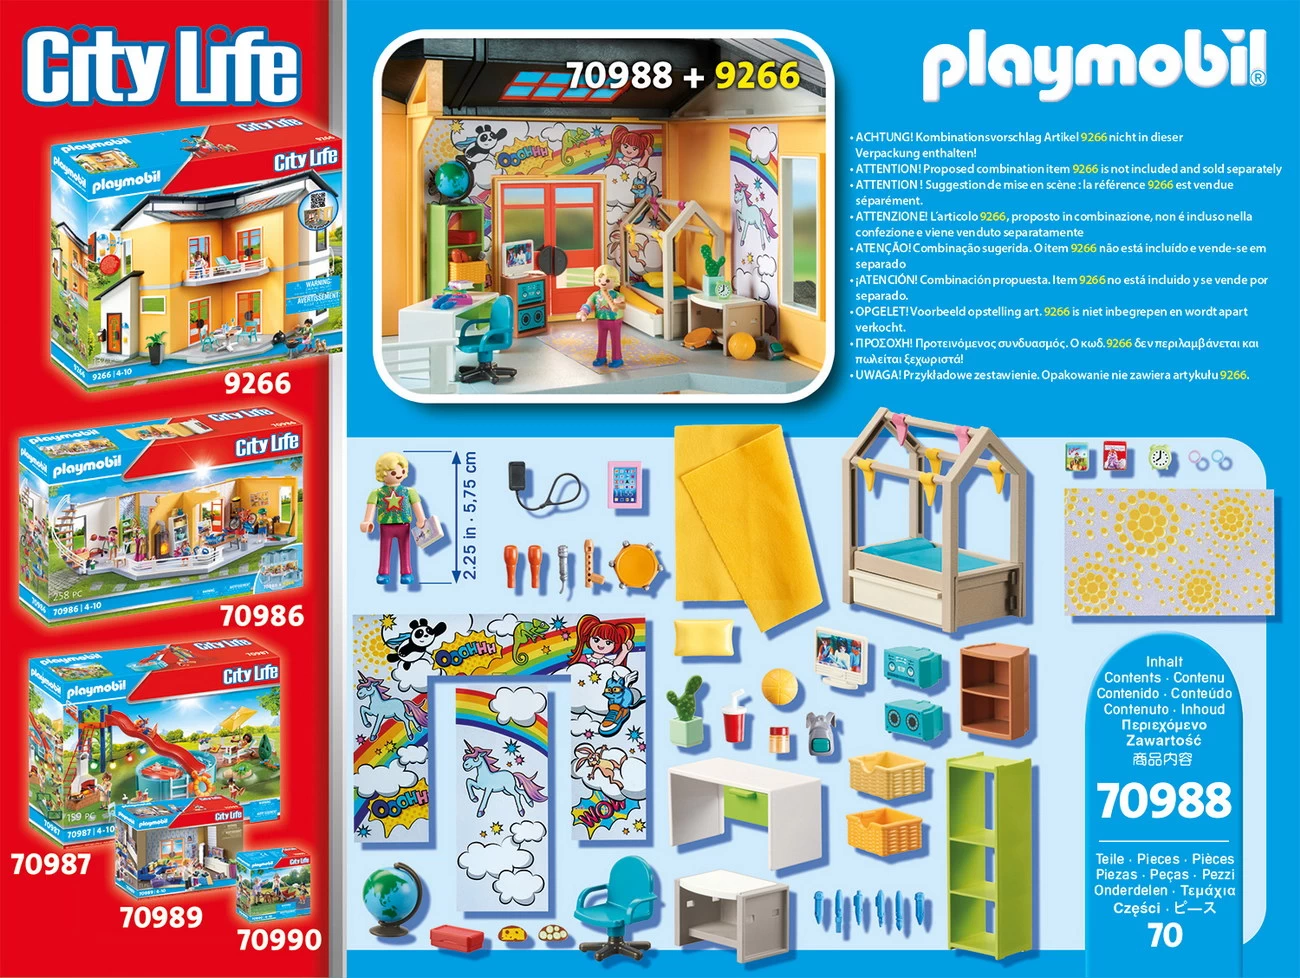 Playmobil 70988 - Jugendzimmer (City Life)